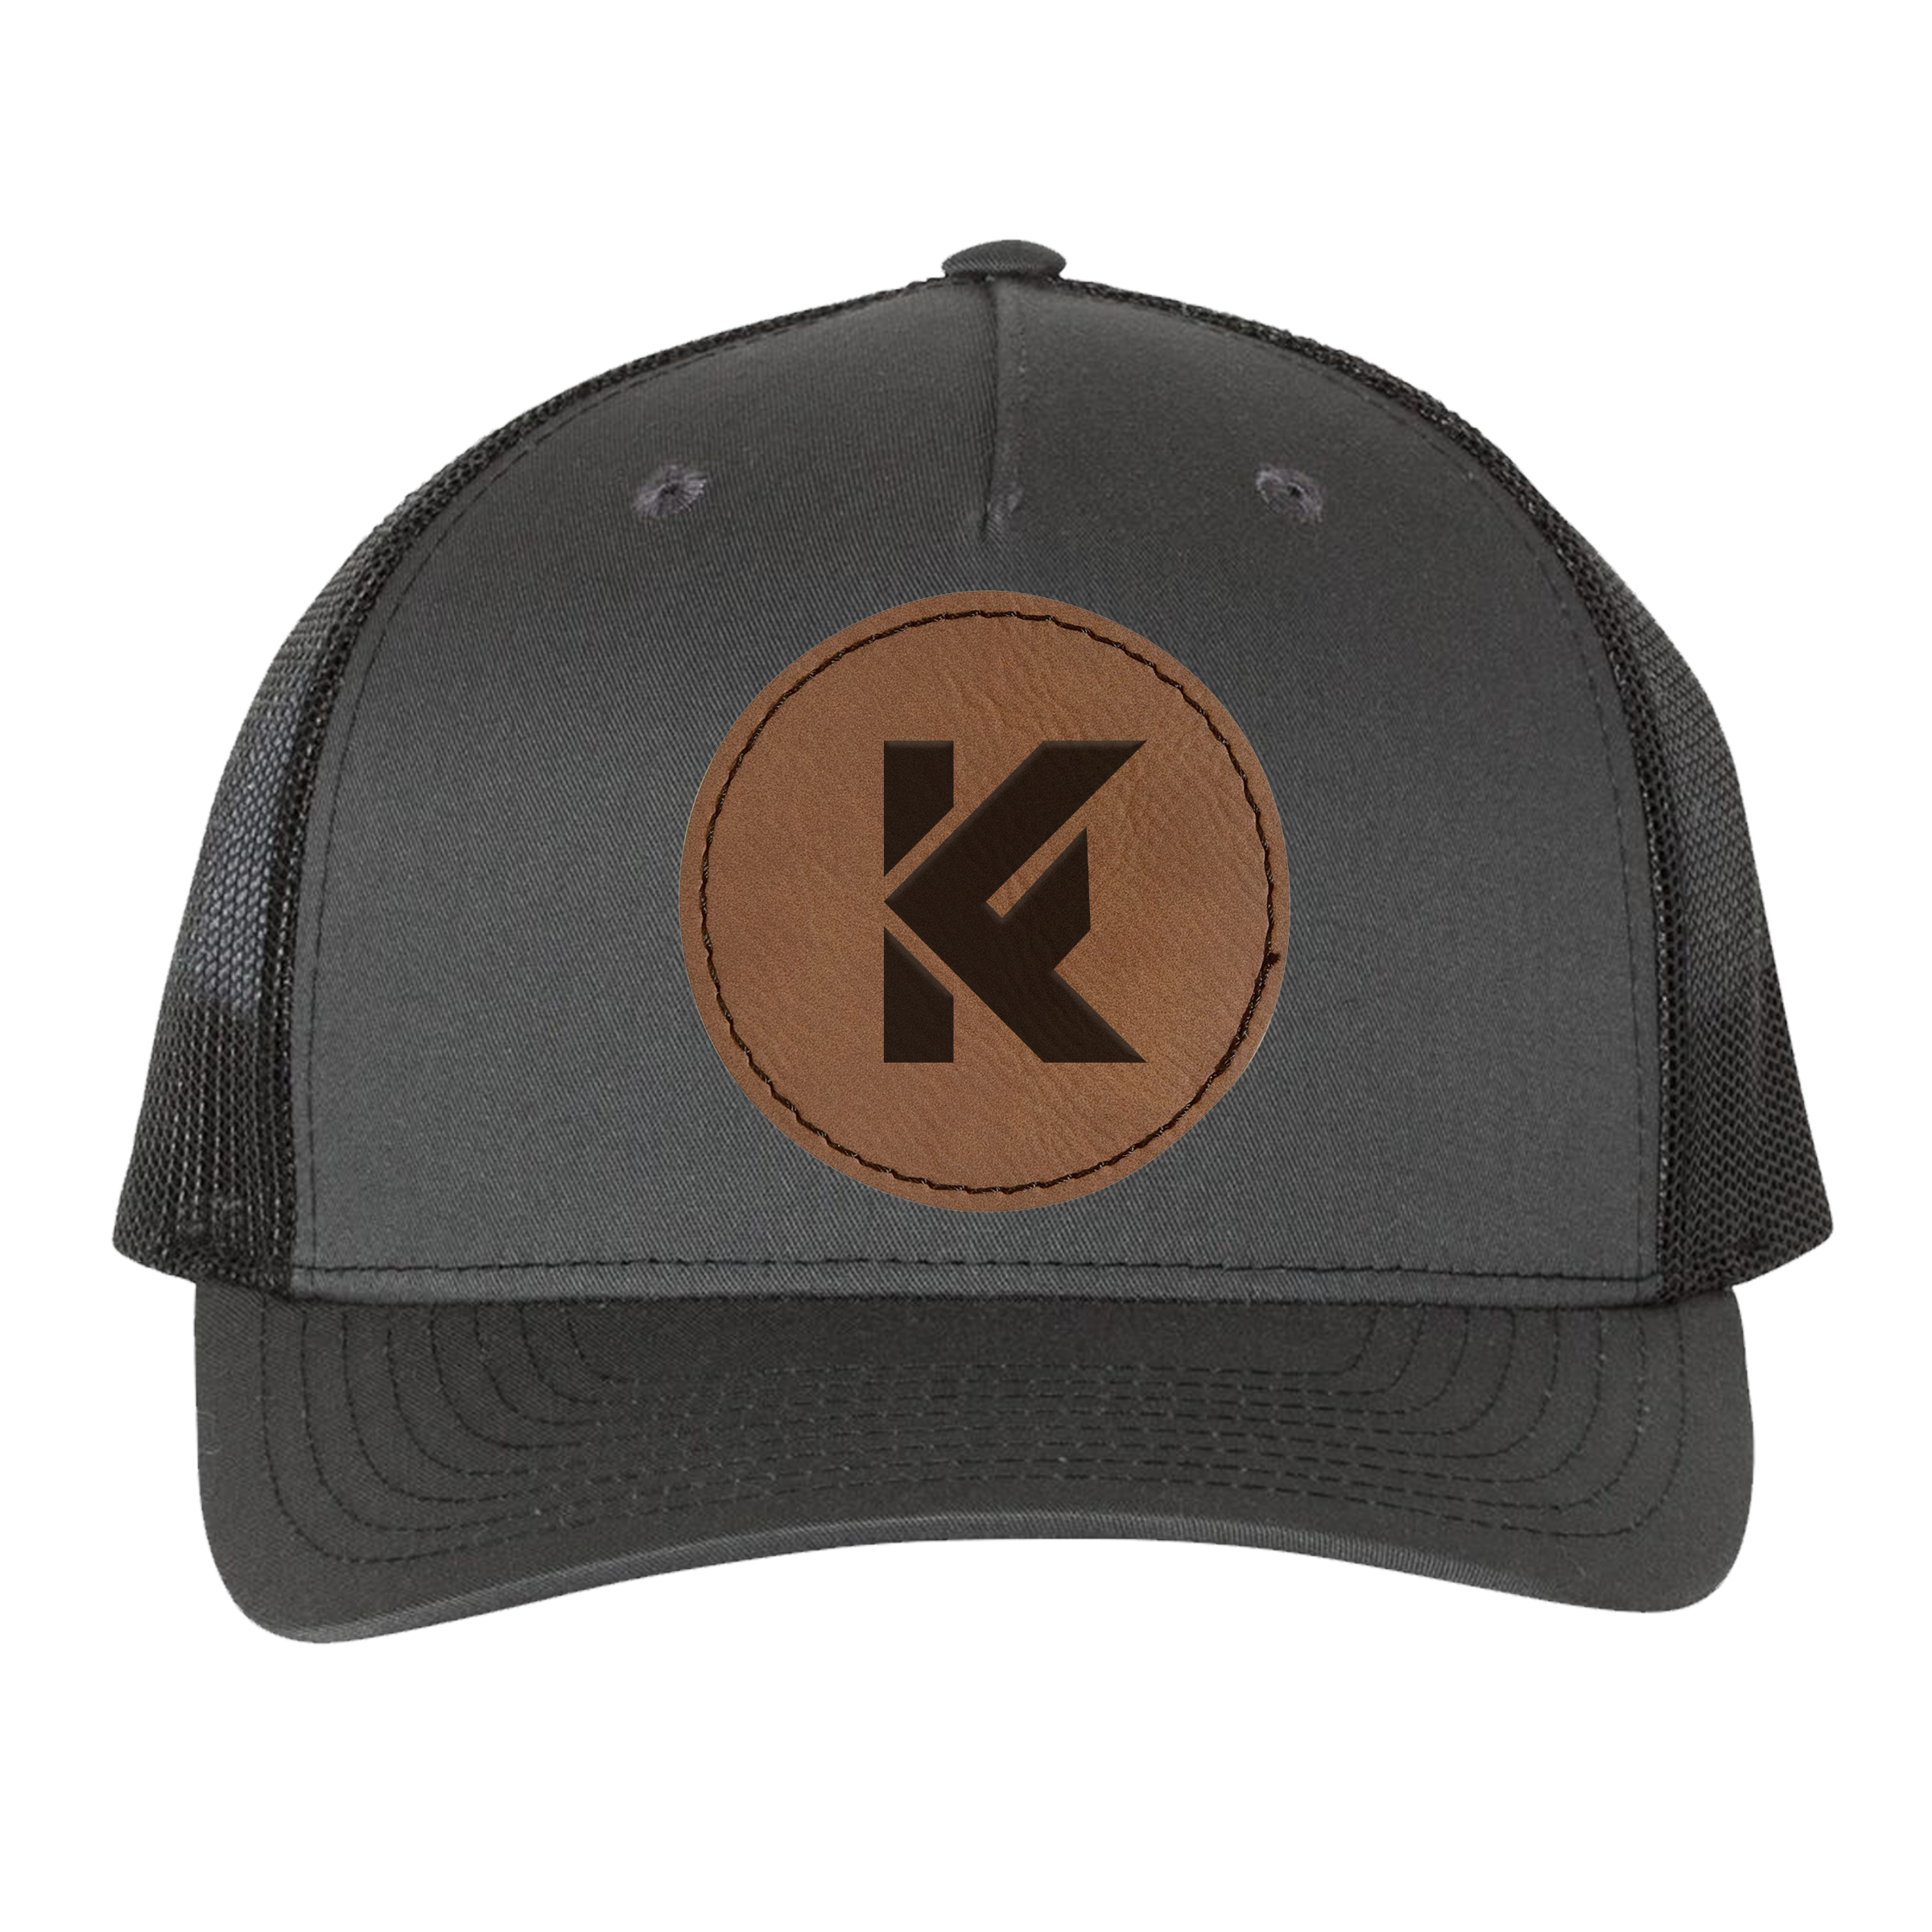 KF Patch Cap